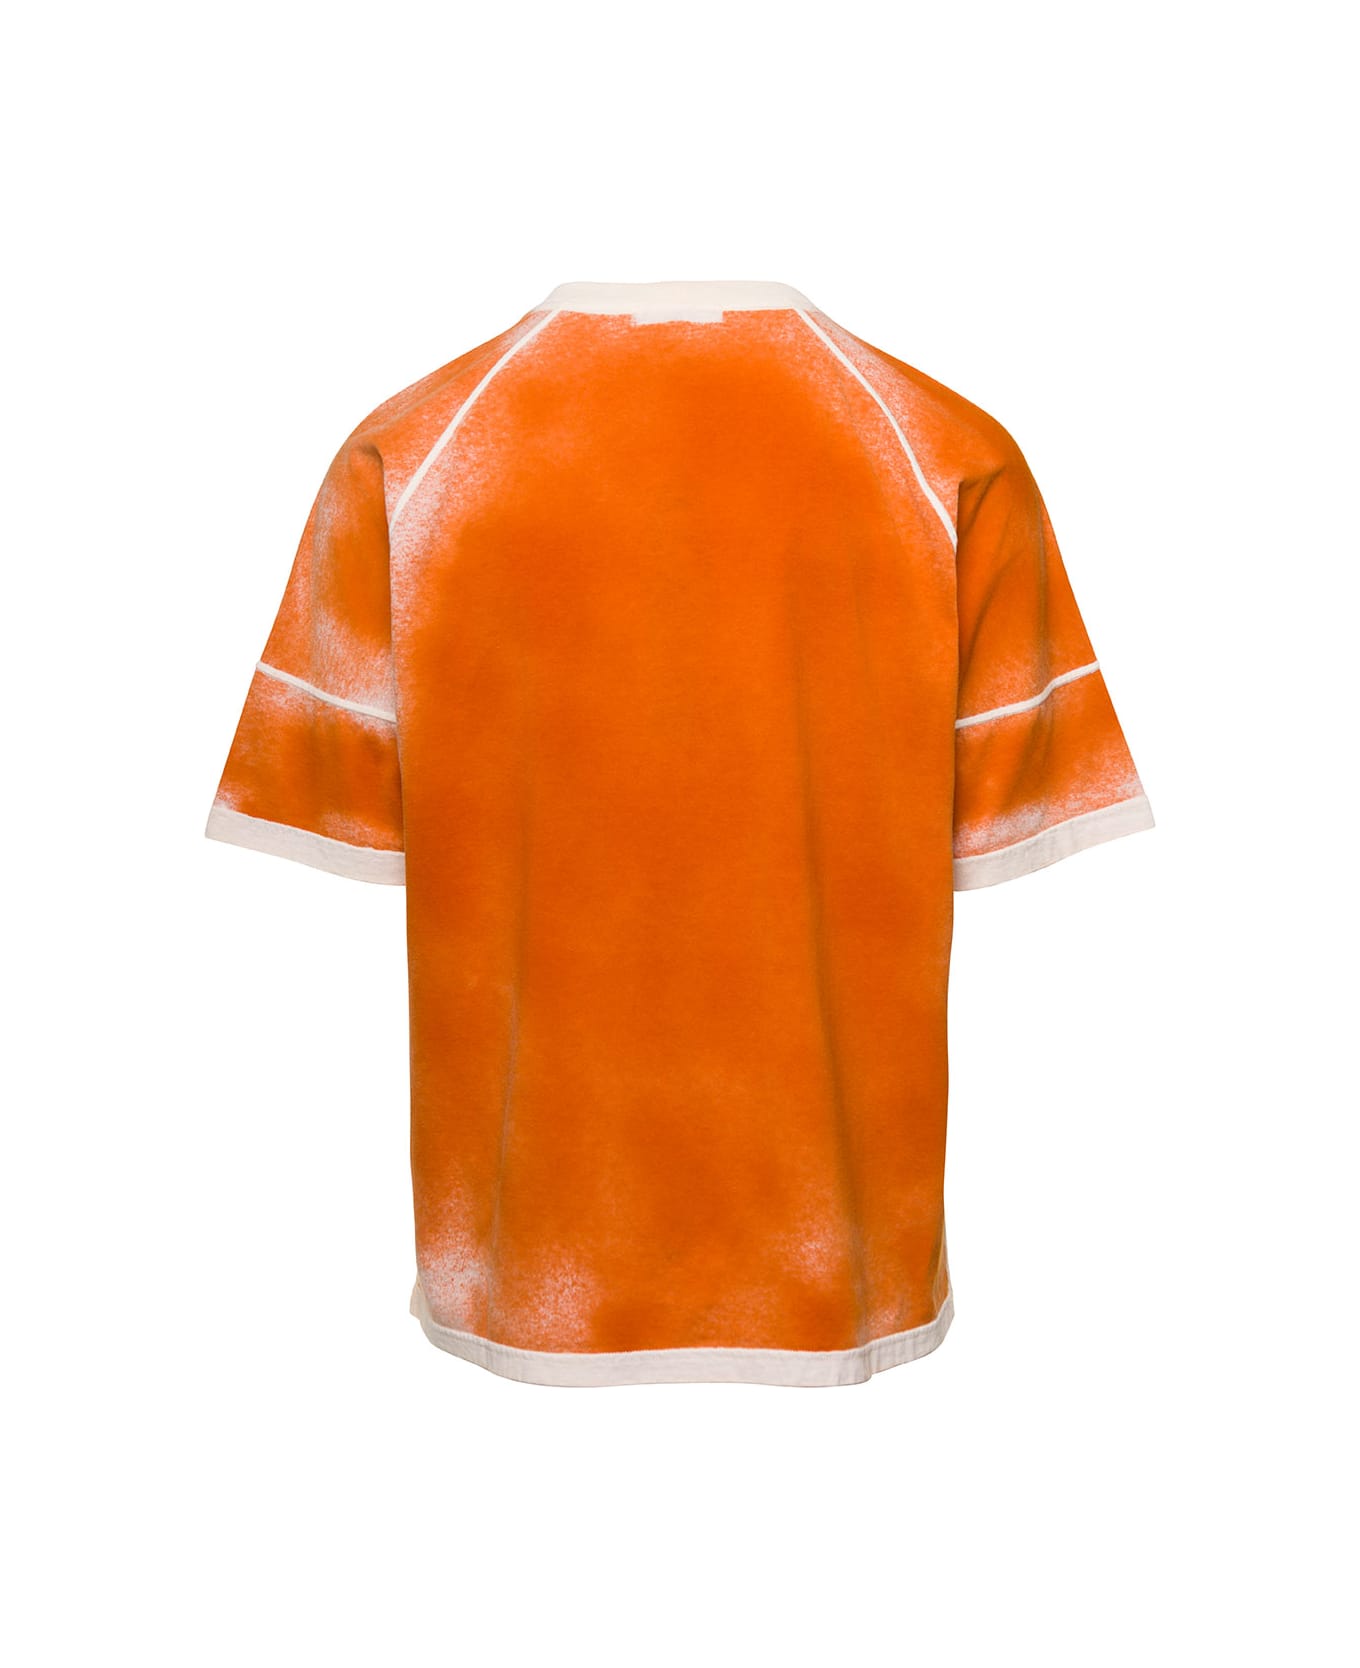 Stone Island Orange T-shirt With Logo Print And Fade Effect In Cotton Man - Orange